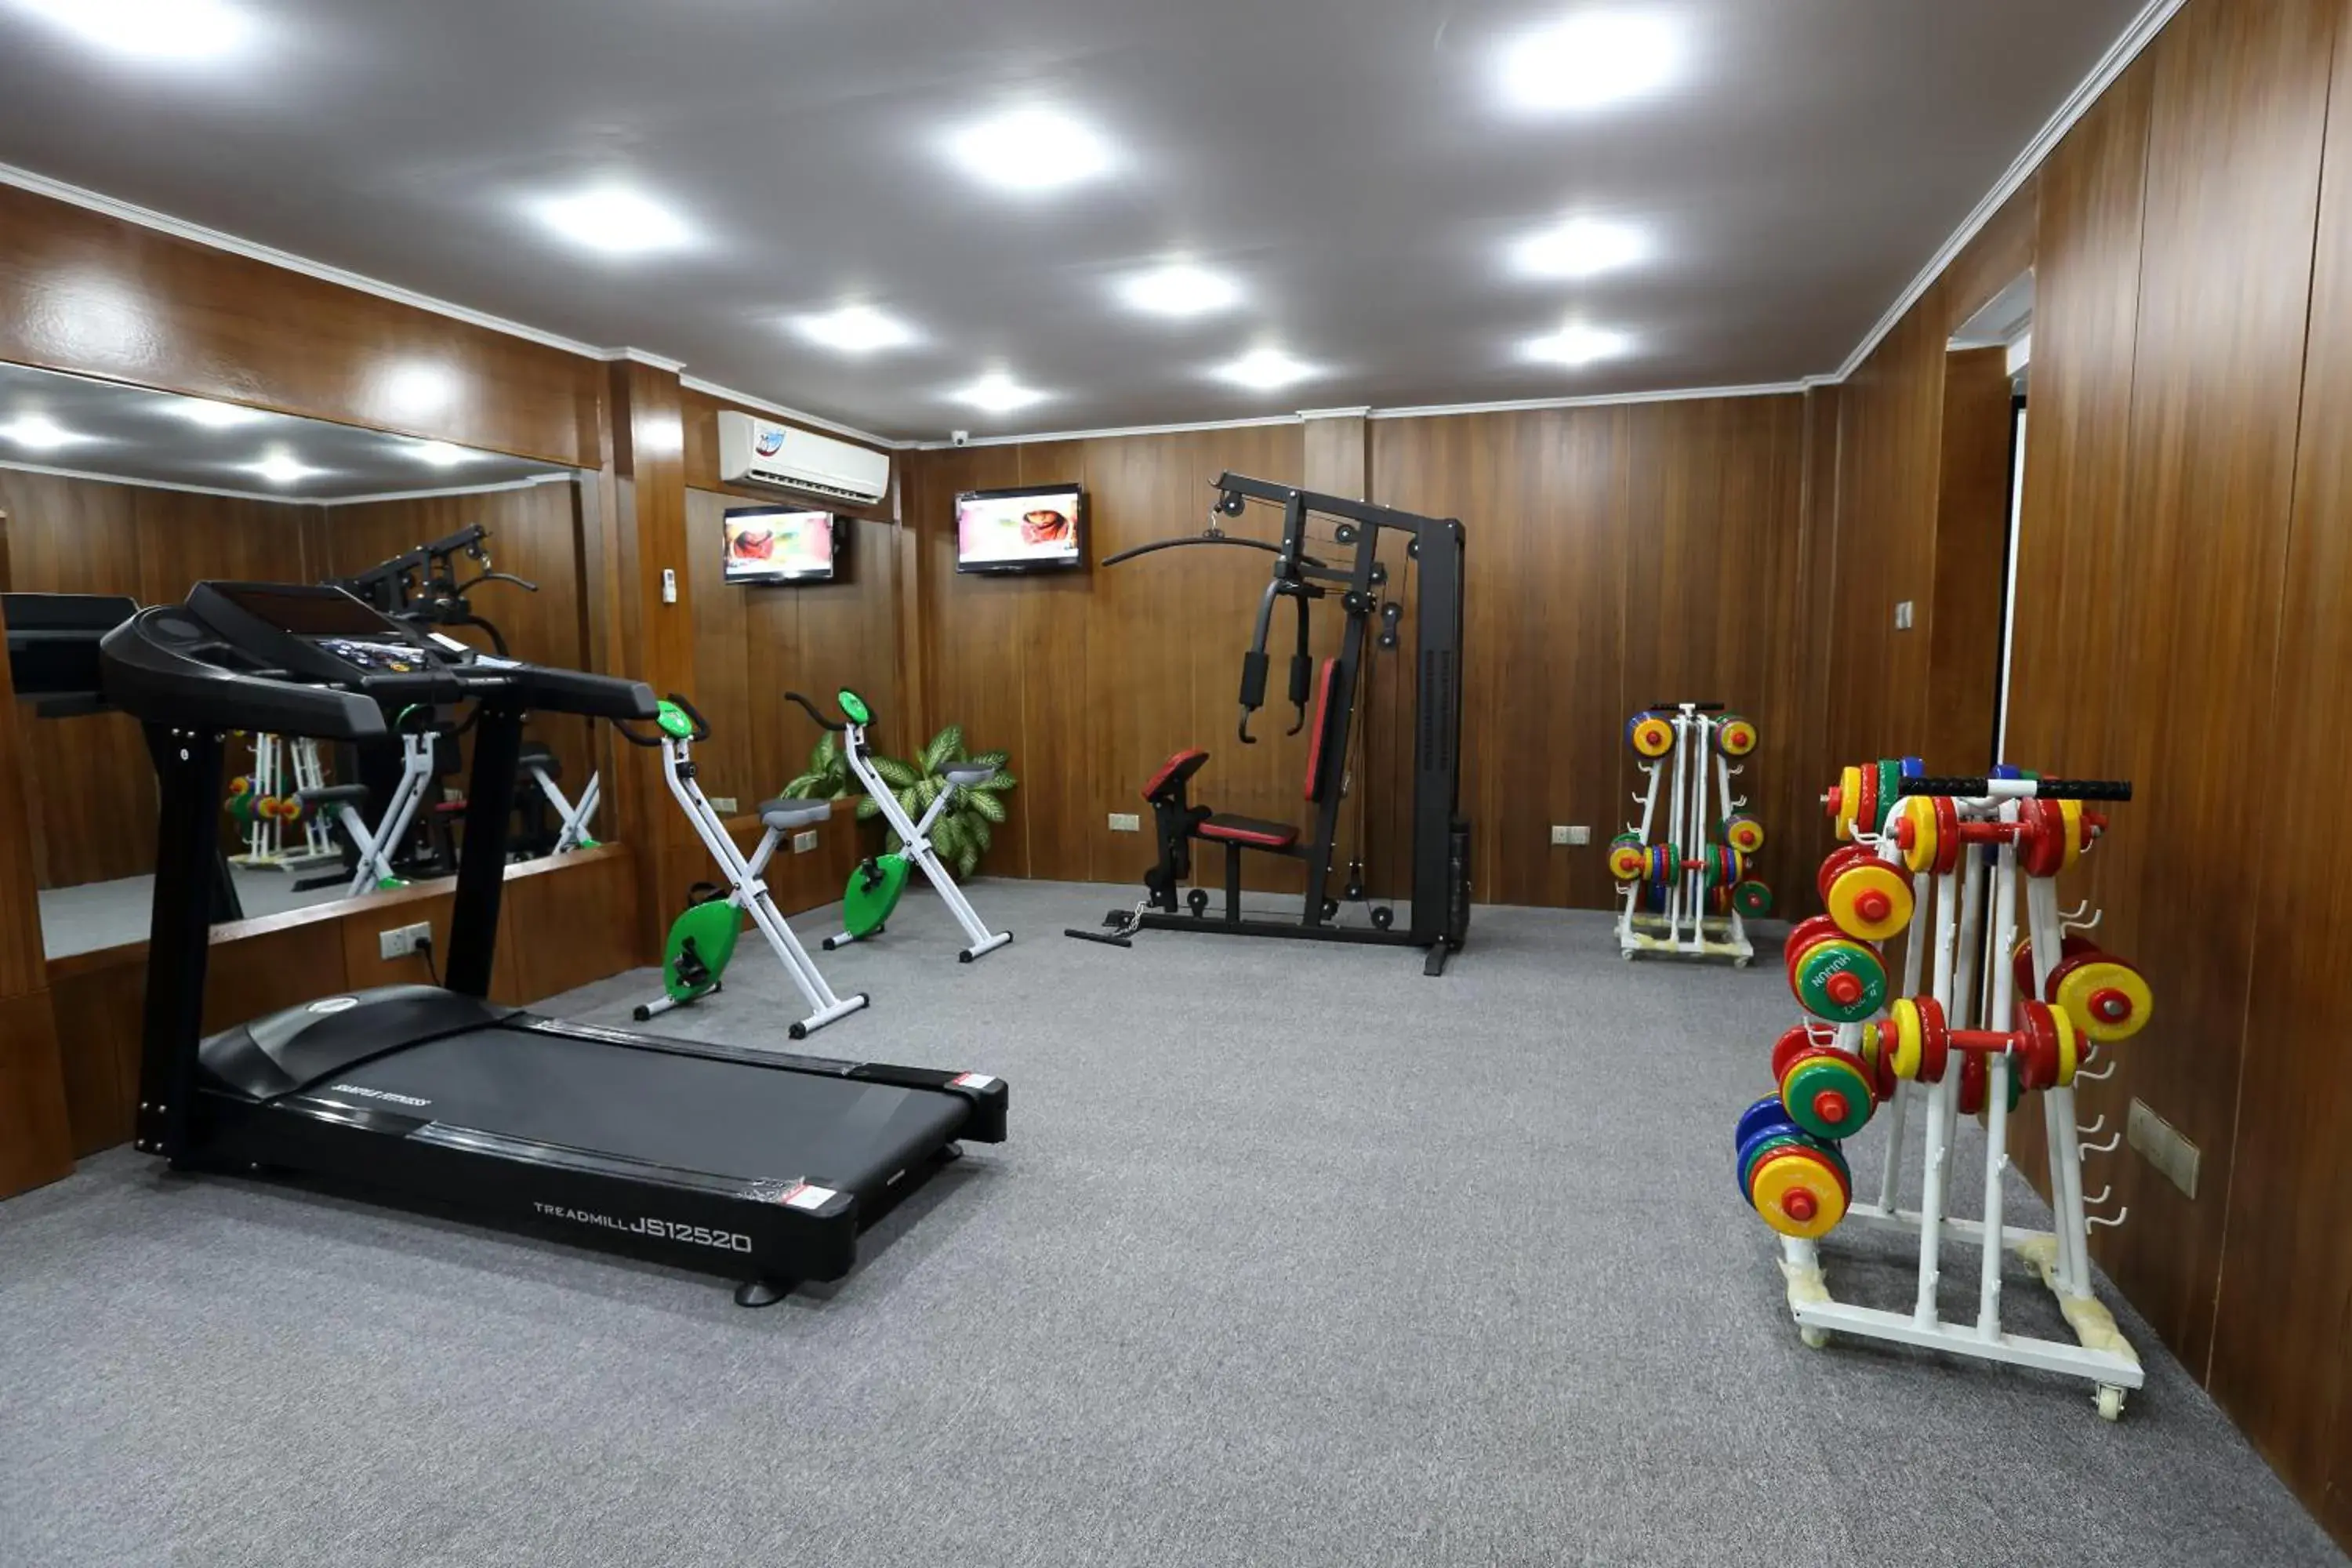 Fitness centre/facilities, Fitness Center/Facilities in Nascent Gardenia Baridhara